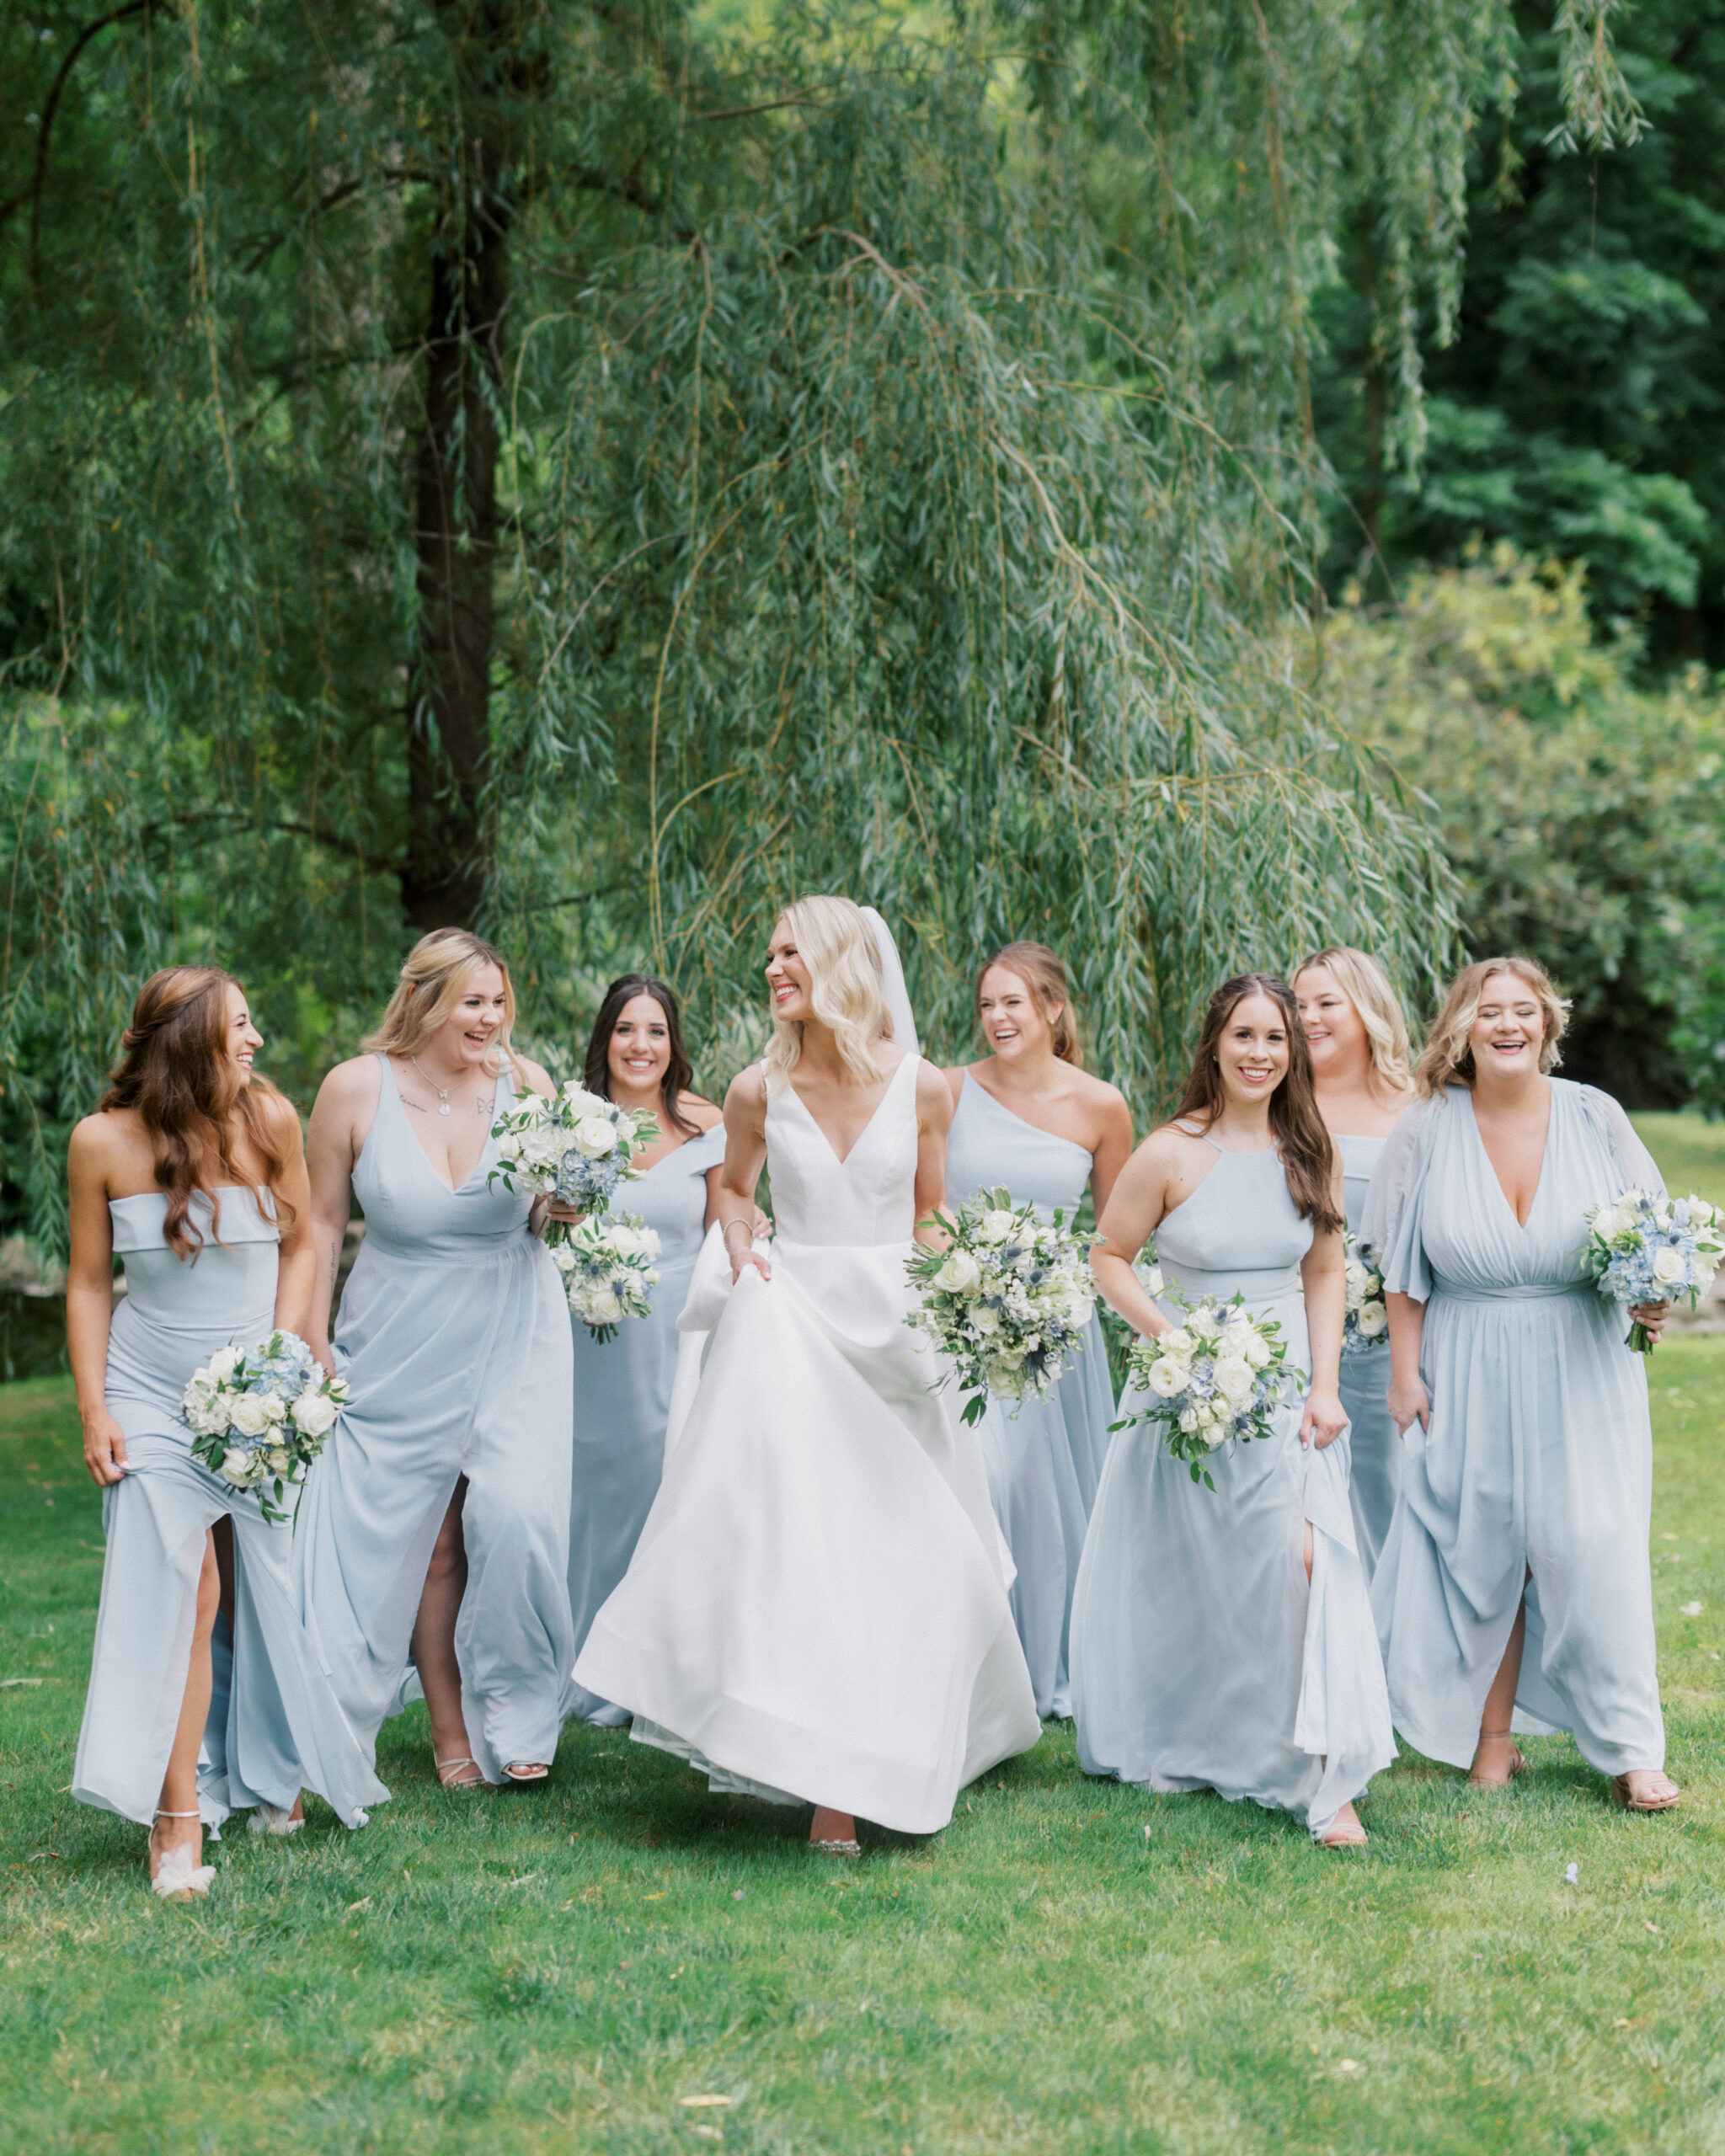 Blue Dessy Bridesmaid Dresses